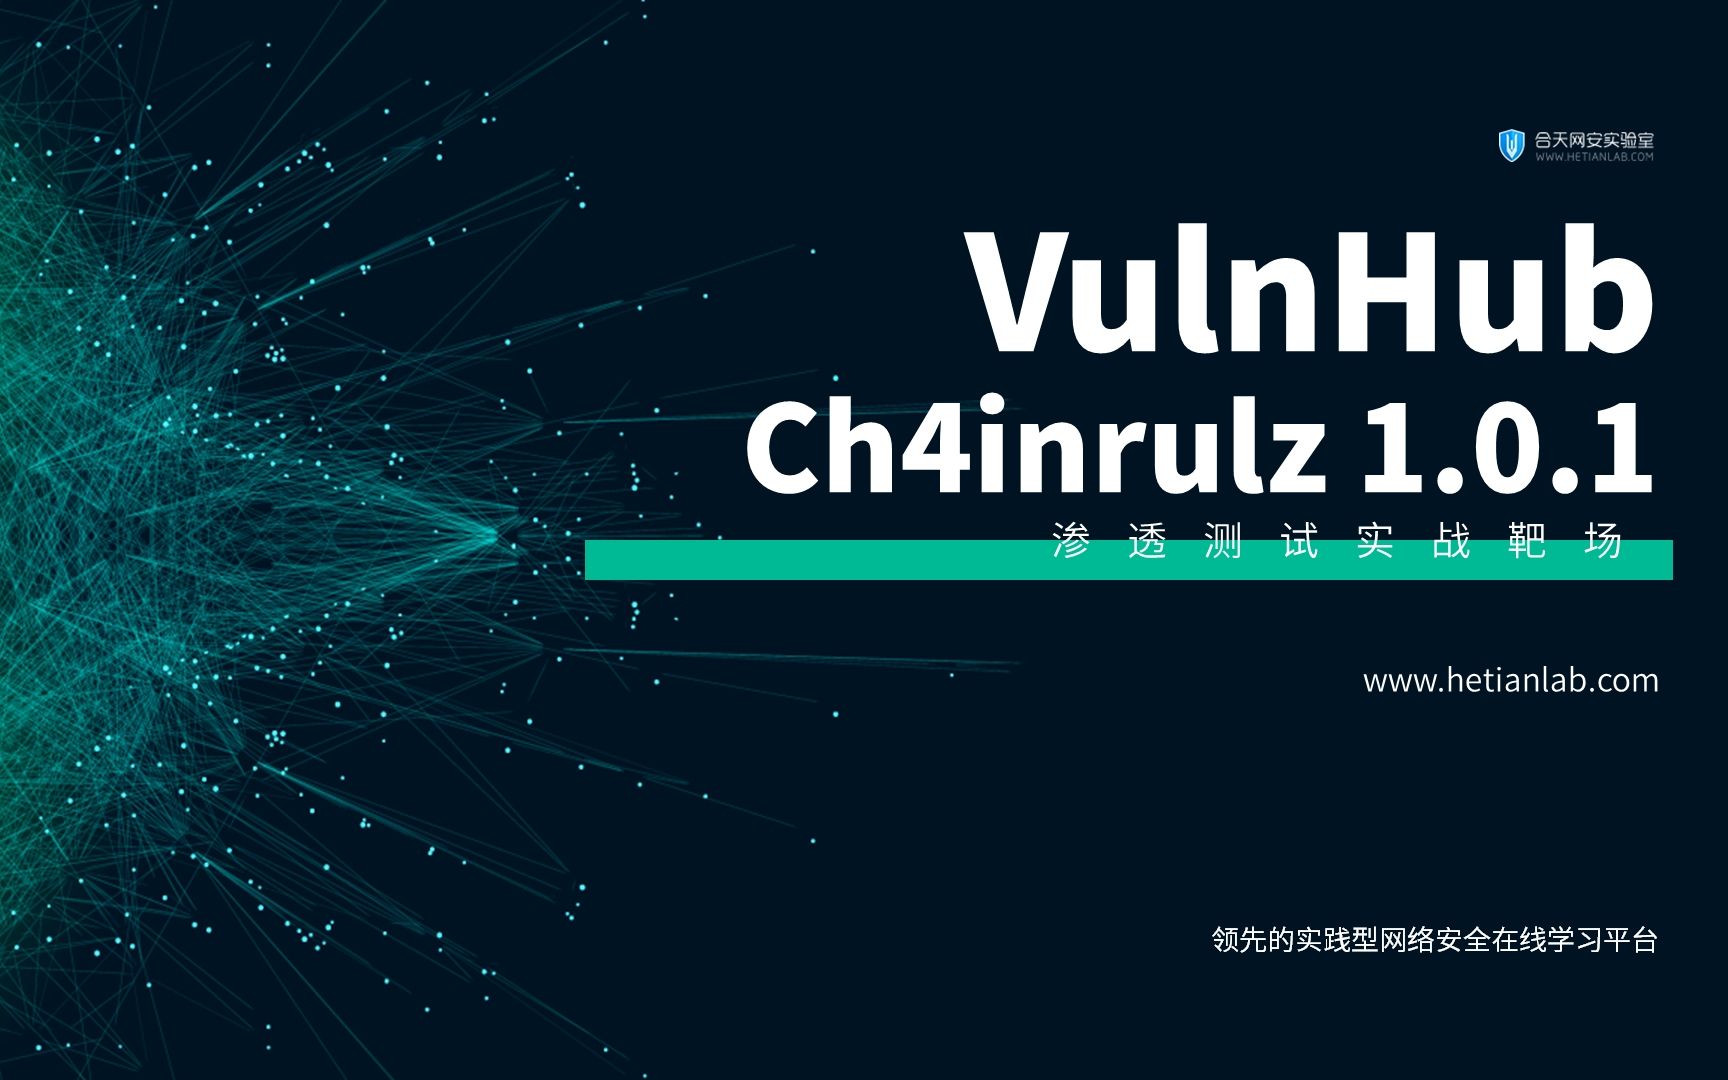 vulnhub-ch4inrulz-1-0-1-bilibili